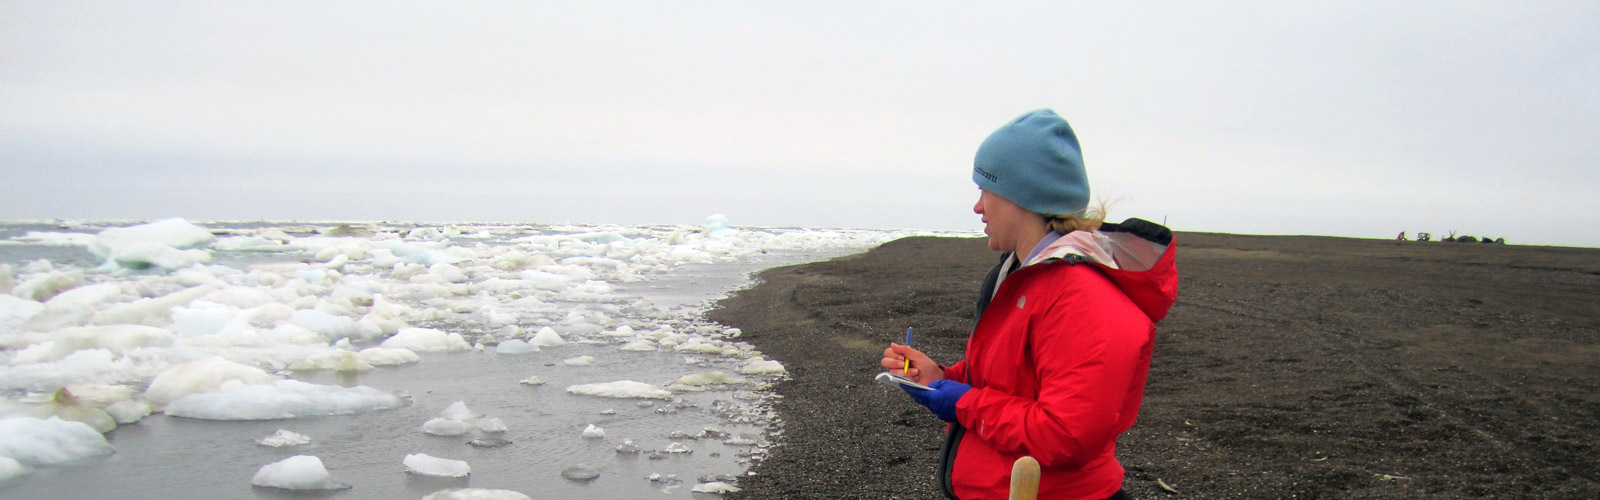 Graduate student observing ice along a shore.